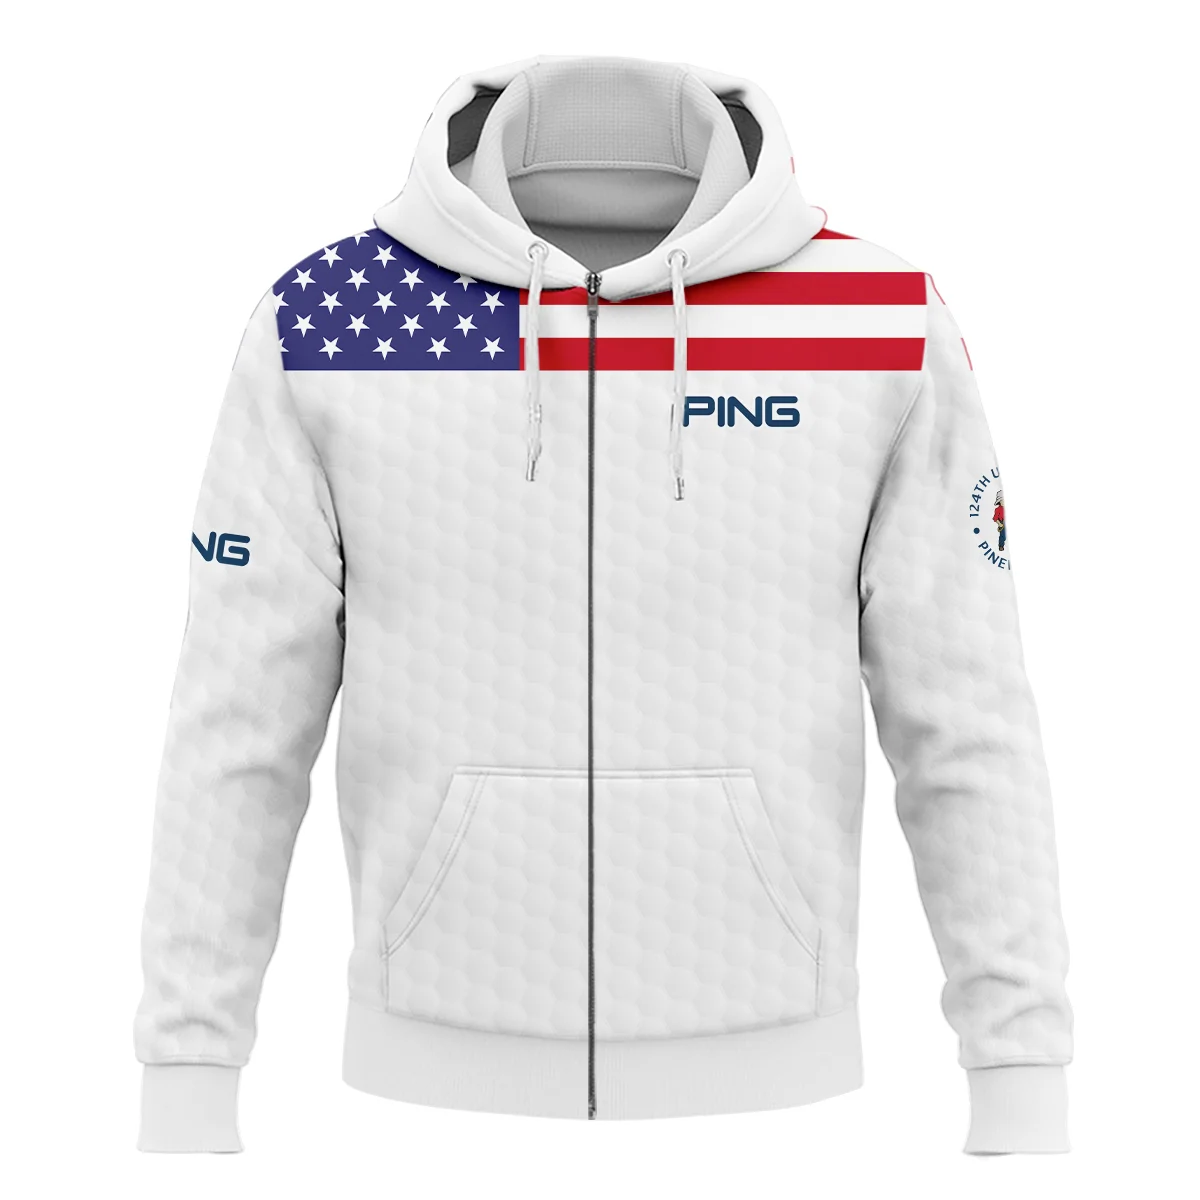 Ping 124th U.S. Open Pinehurst Unisex Sweatshirt USA Flag Golf Pattern All Over Print Sweatshirt